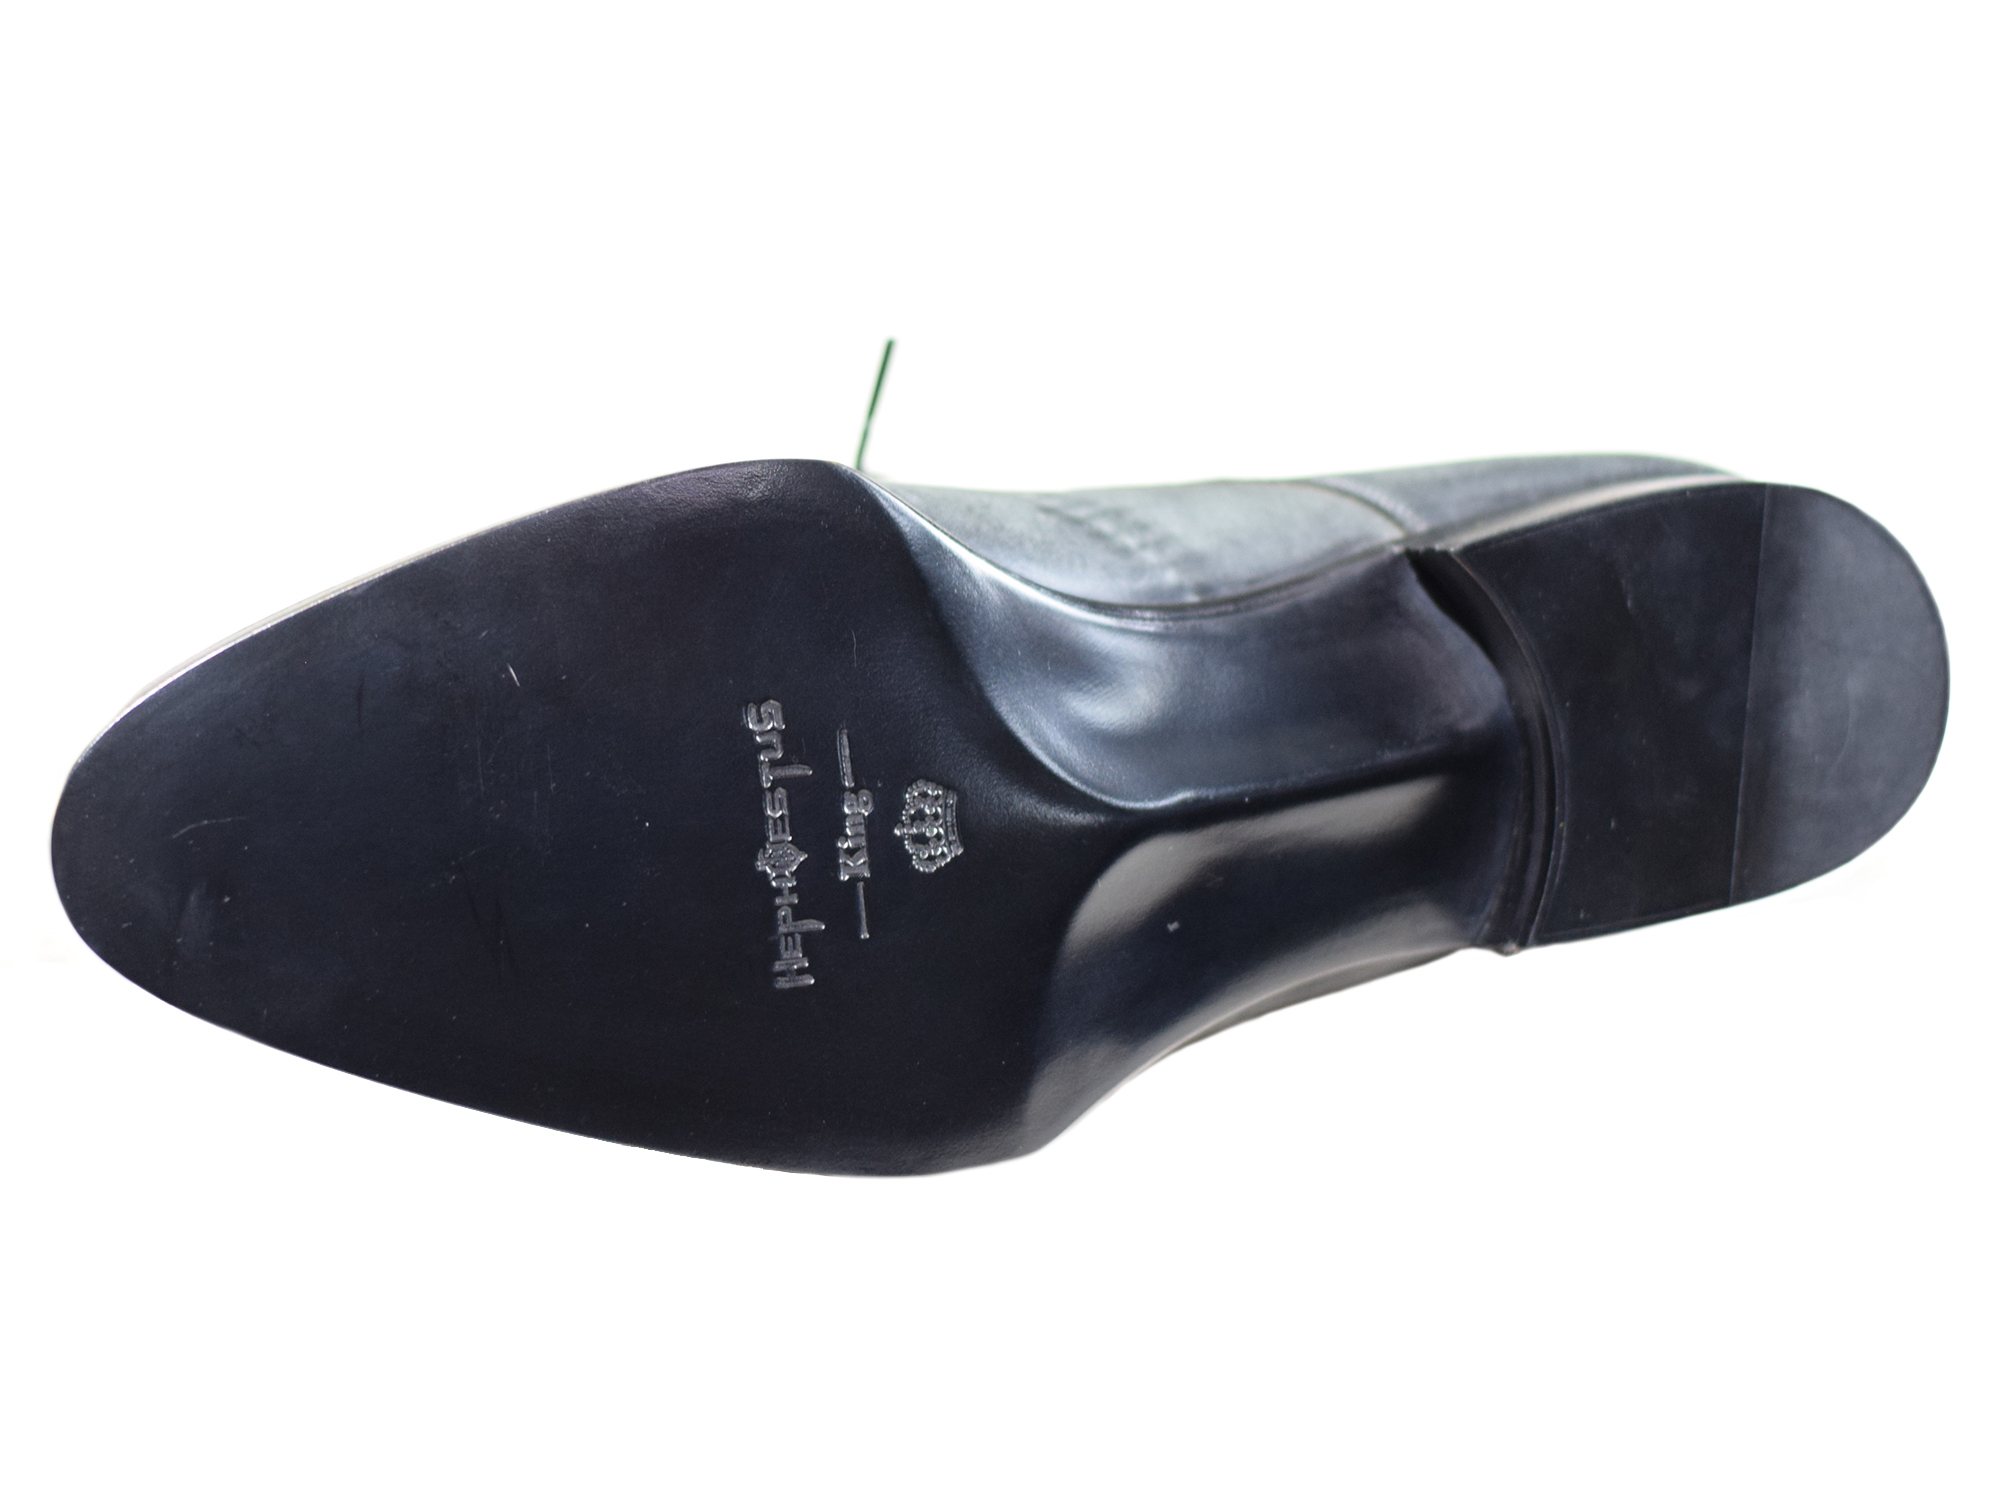 MTO Blucher reverse wingtip shoes